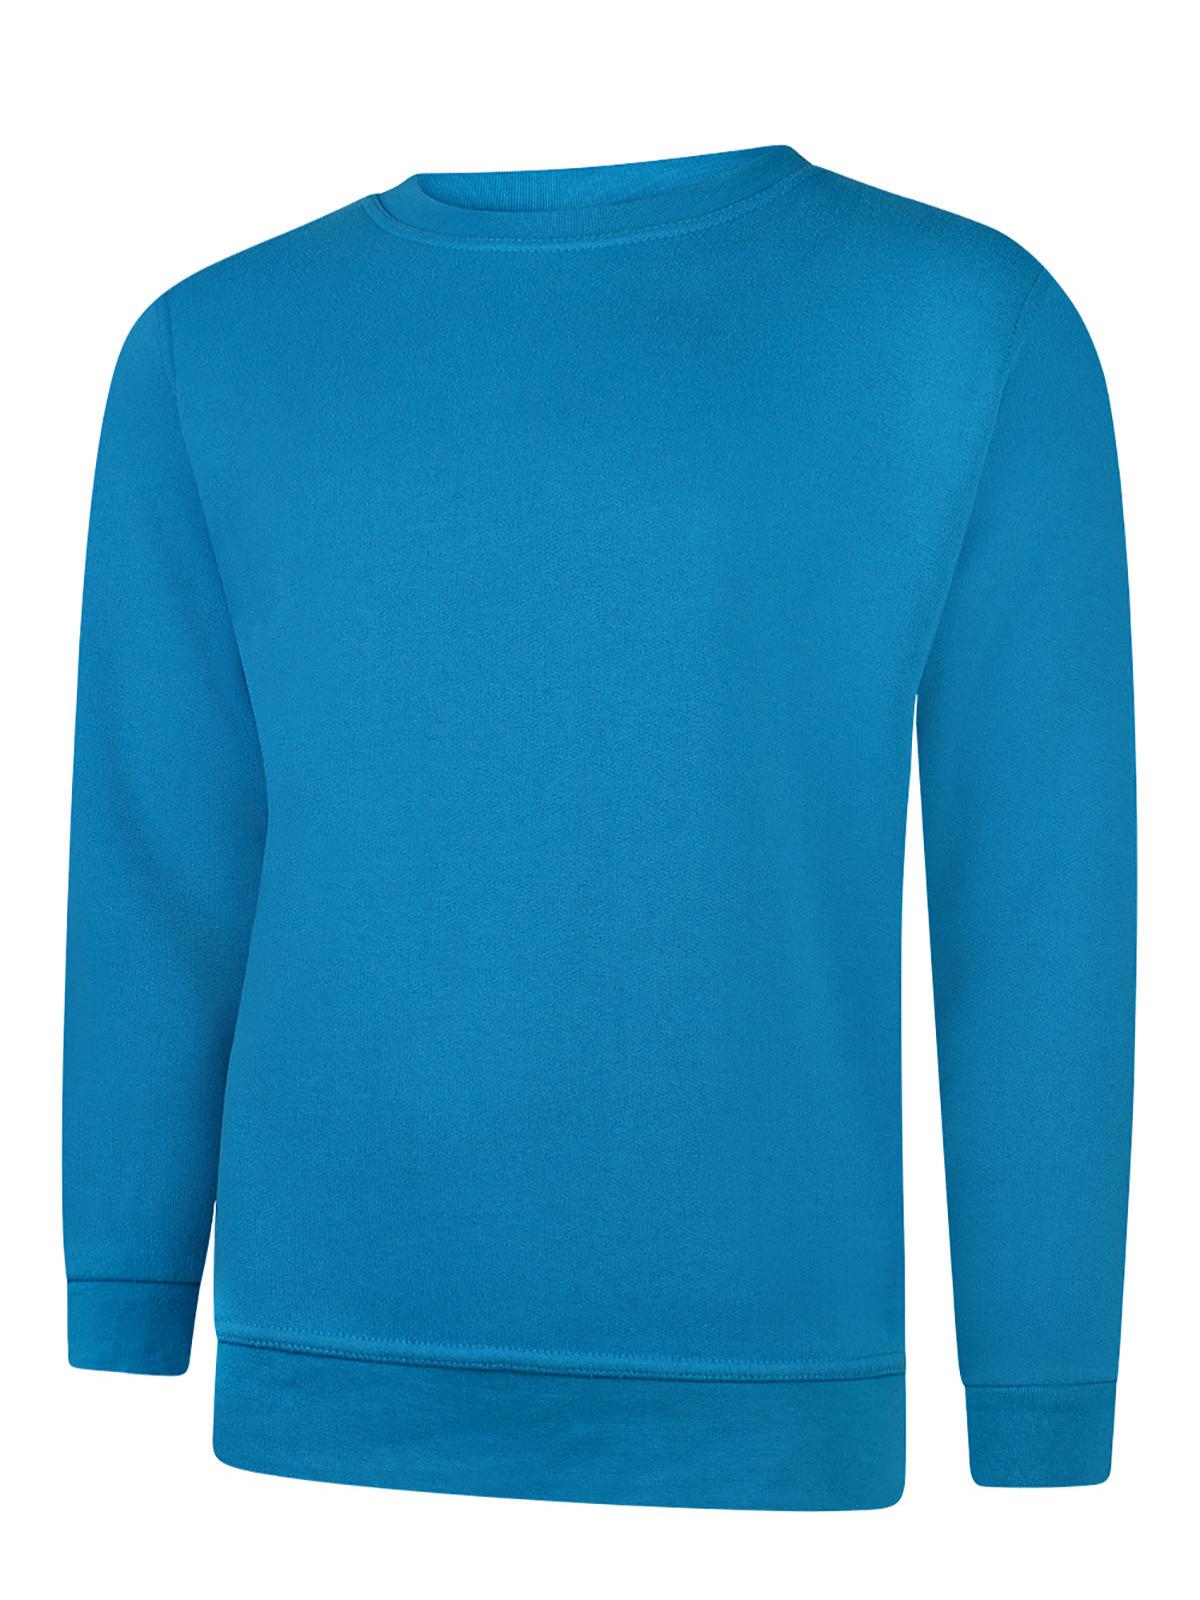 Uneek Classic Sweatshirt - Sapphire Blue